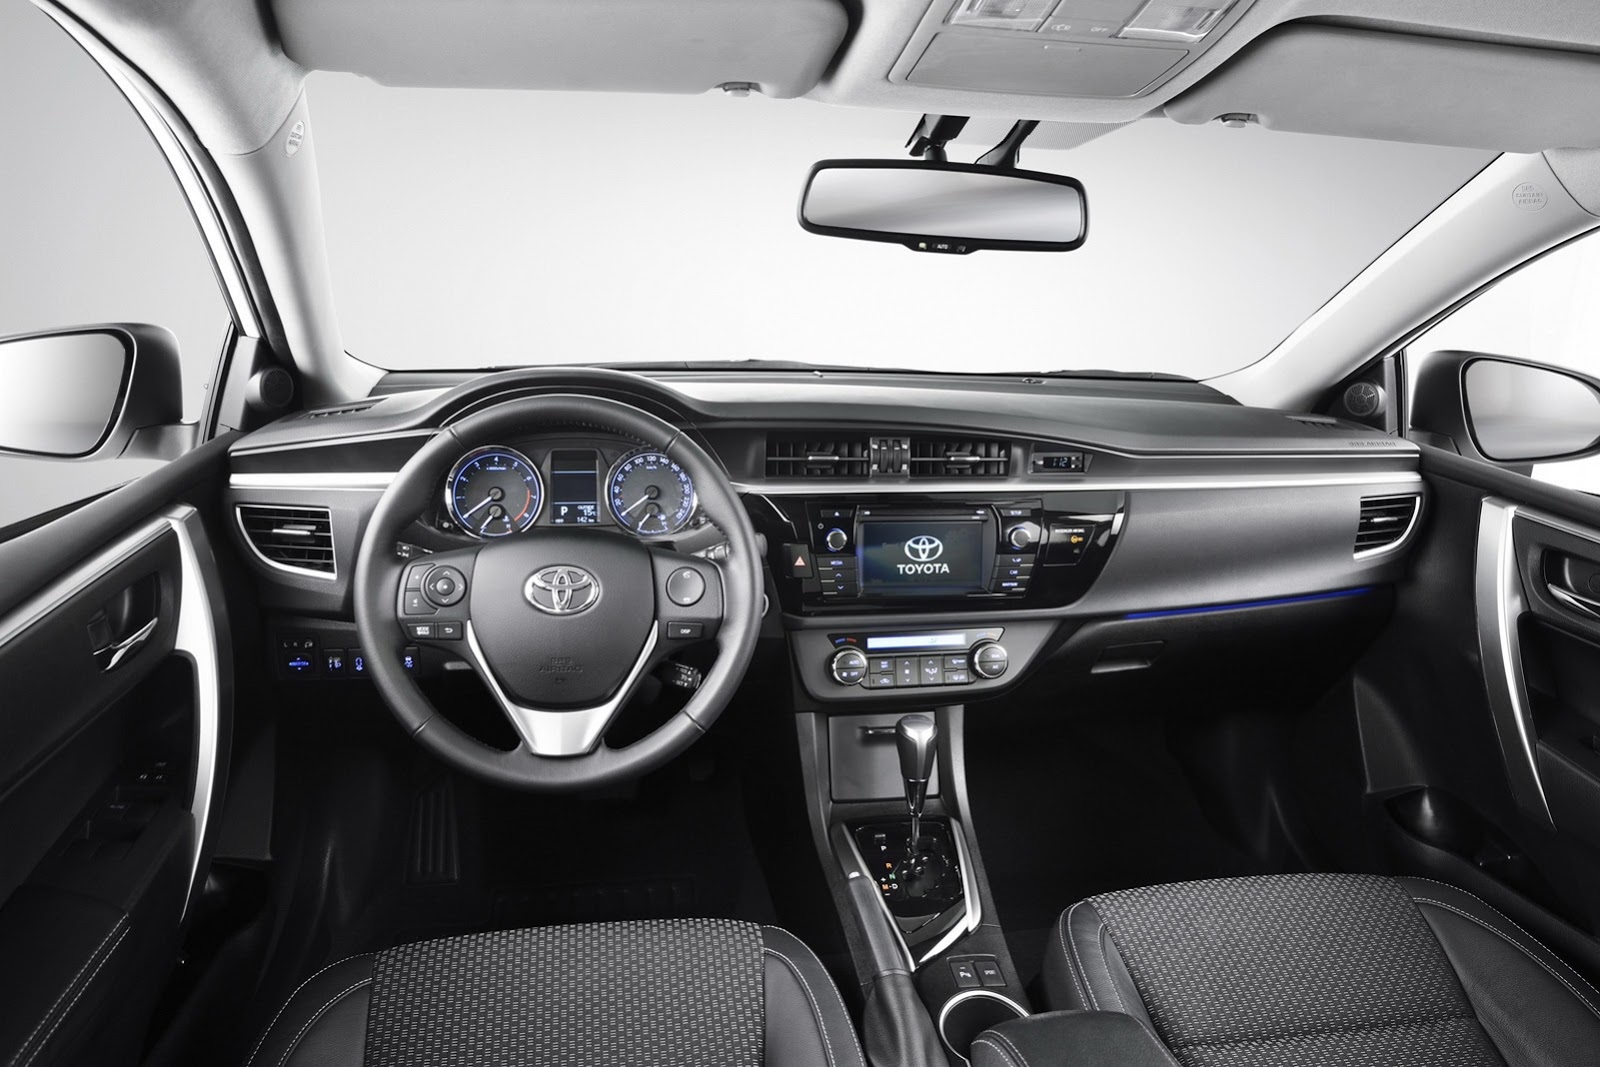 2014 Toyota Corolla EU-Version Interior Dashboard